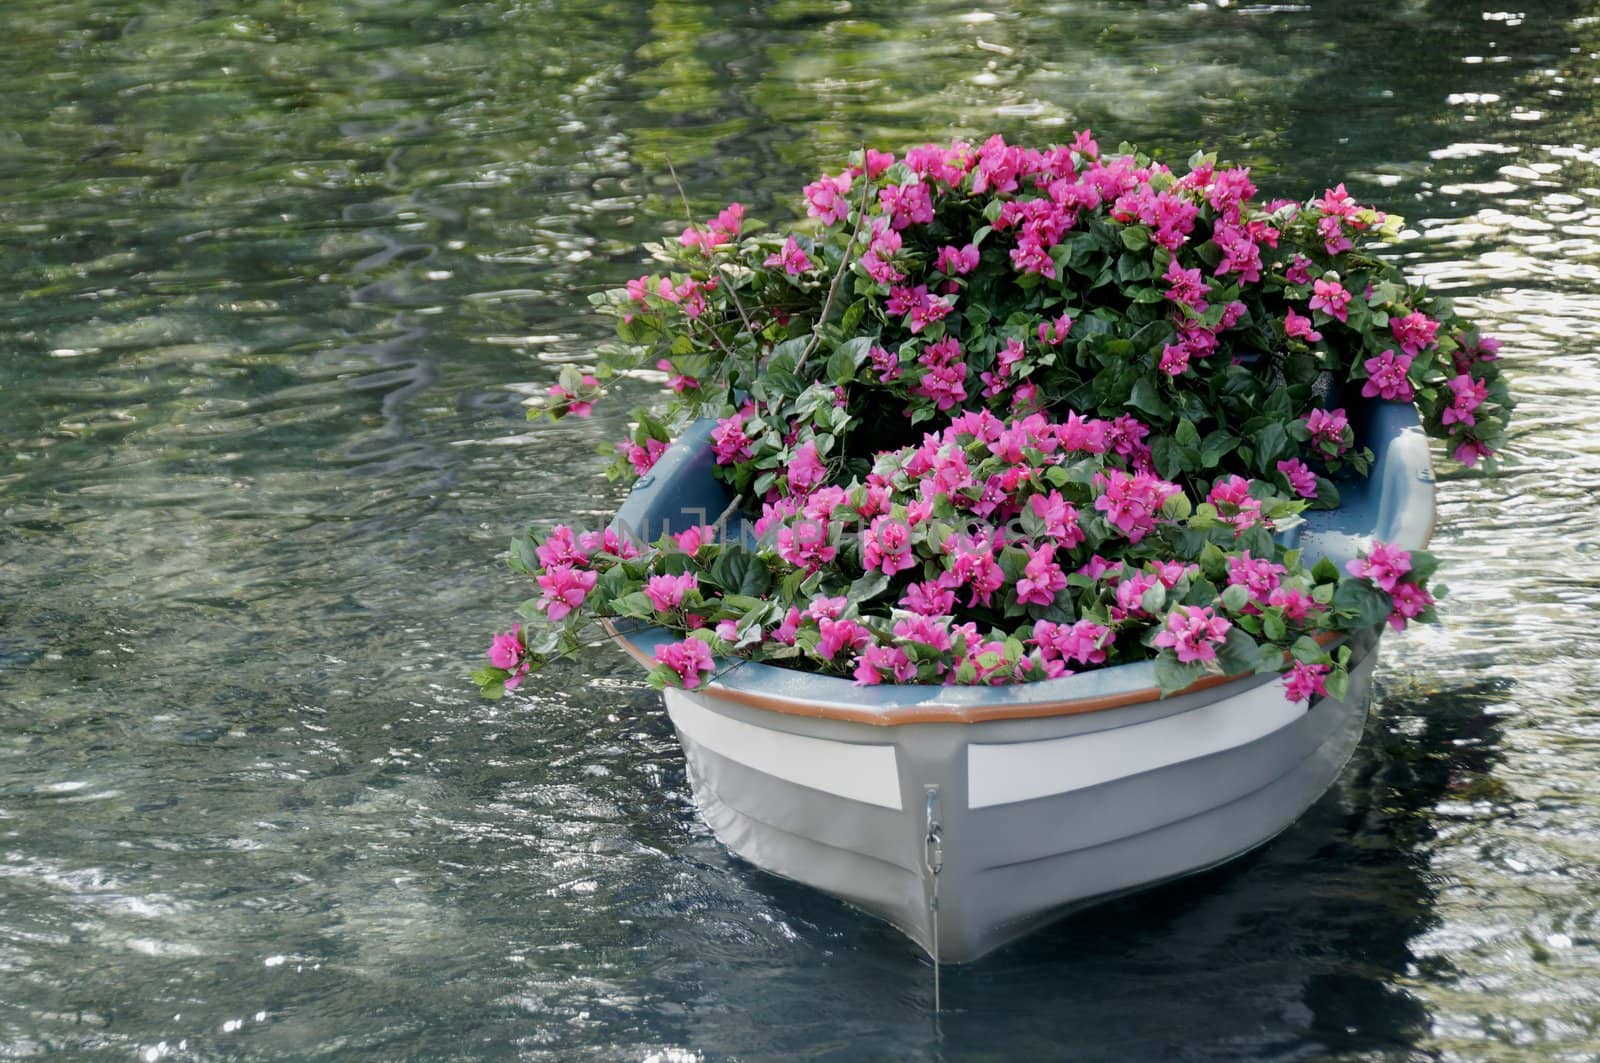 Boat of Flowers by wayneandrose